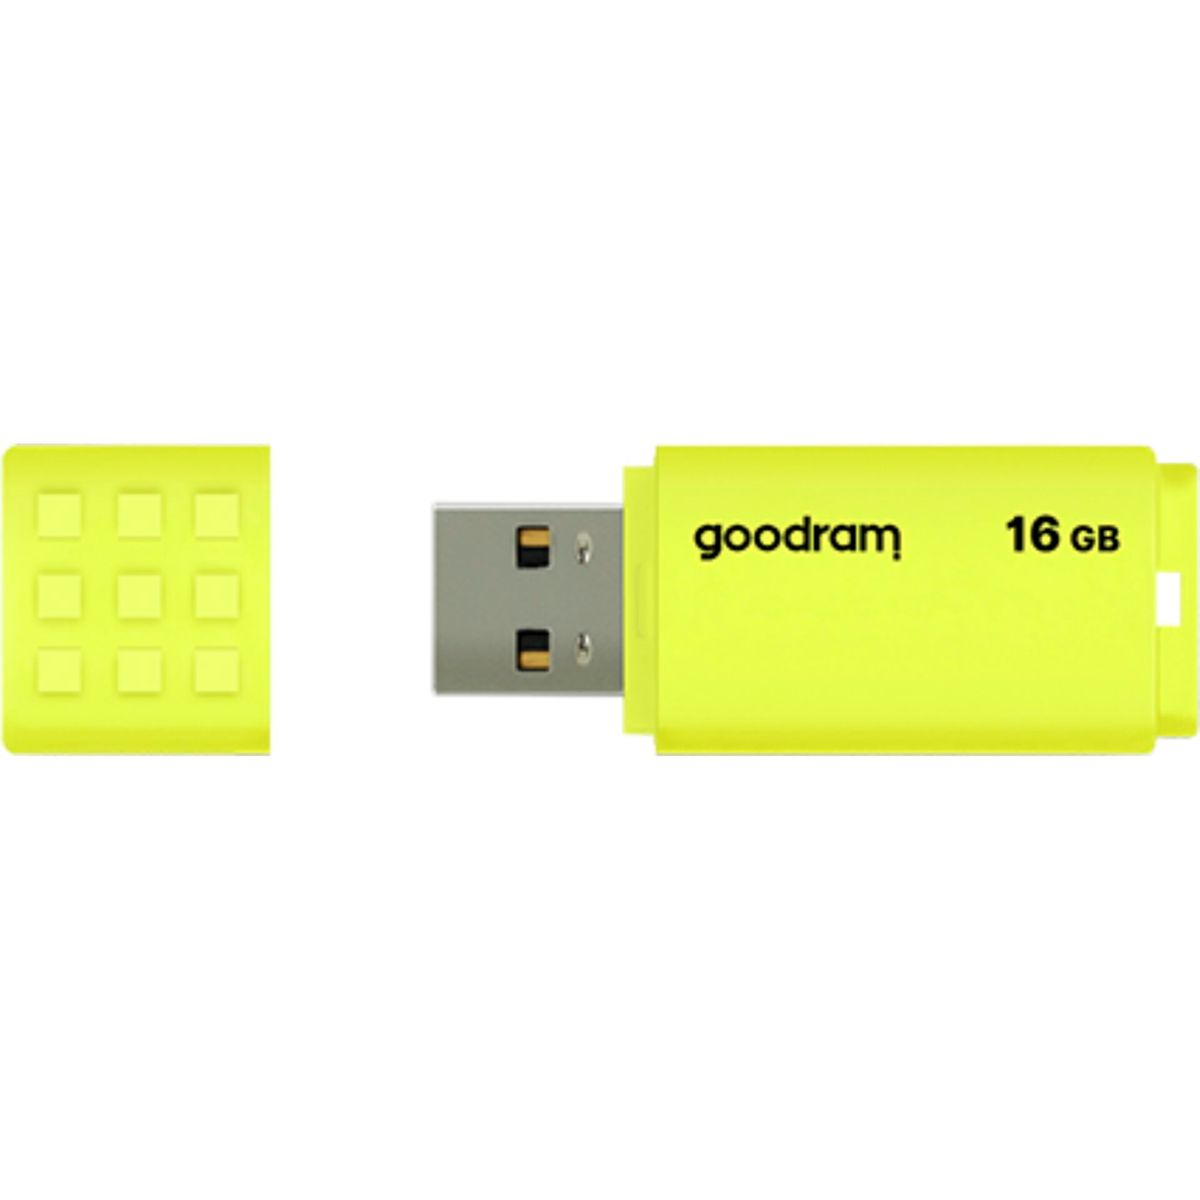 2.0 UME2 Stick GB) (gelb, GOODRAM USB Yellow 16 USB 16GB